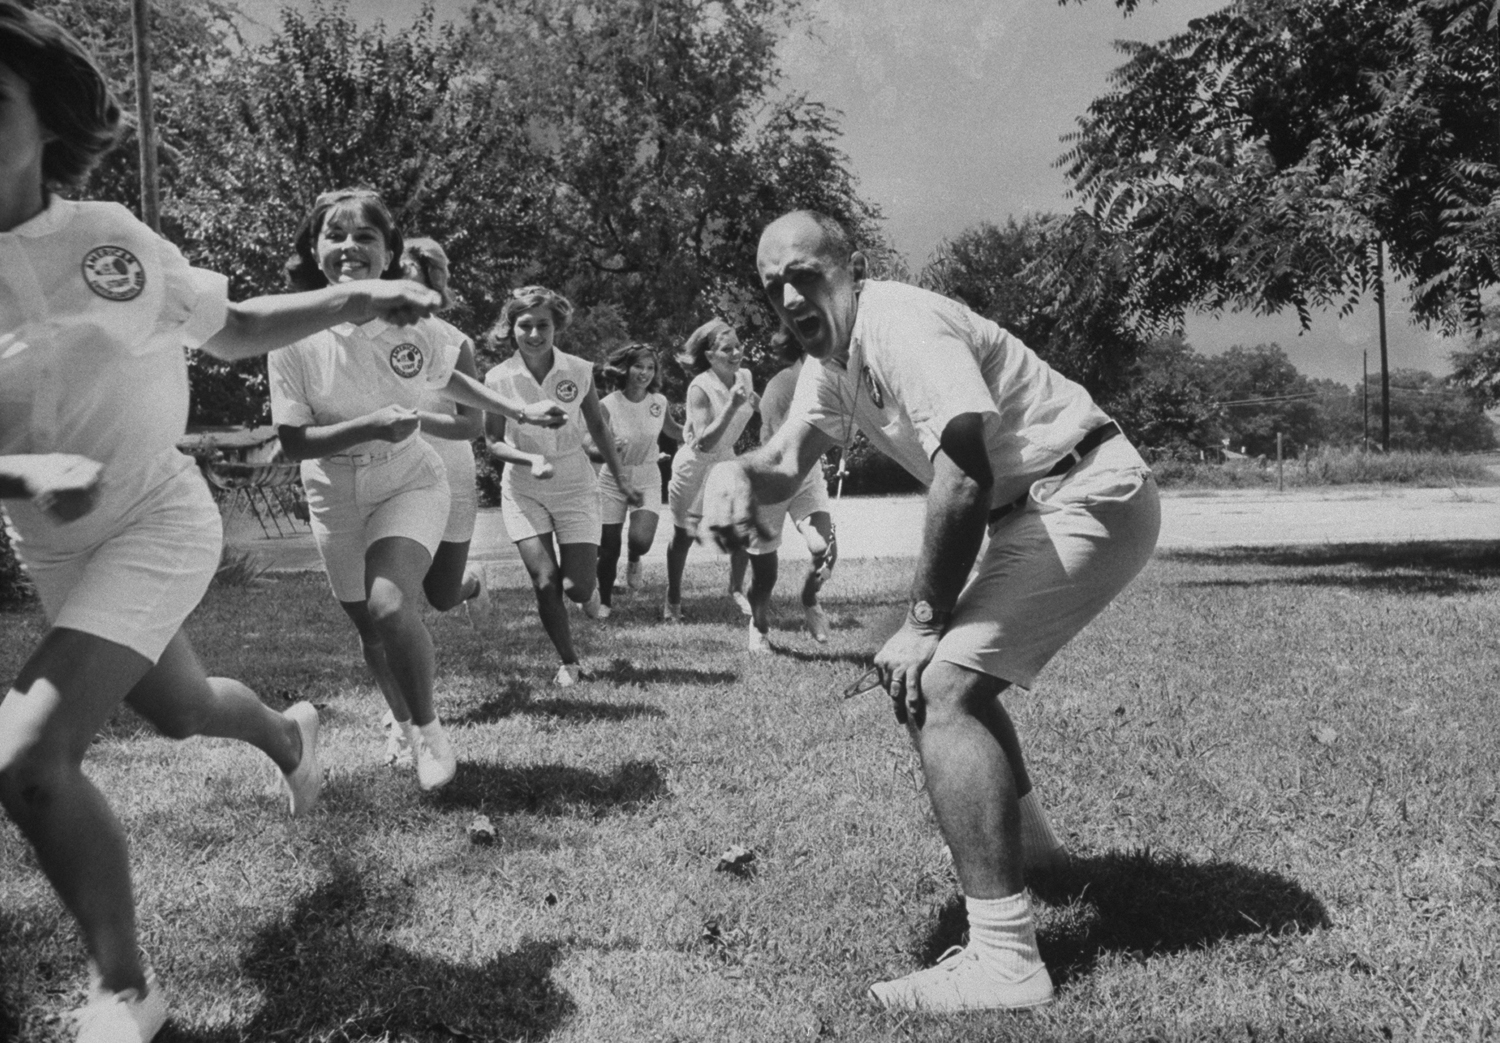 Cheerleader training under Bill Horan of the American Cheerleaders Association, Alabama, 1965.